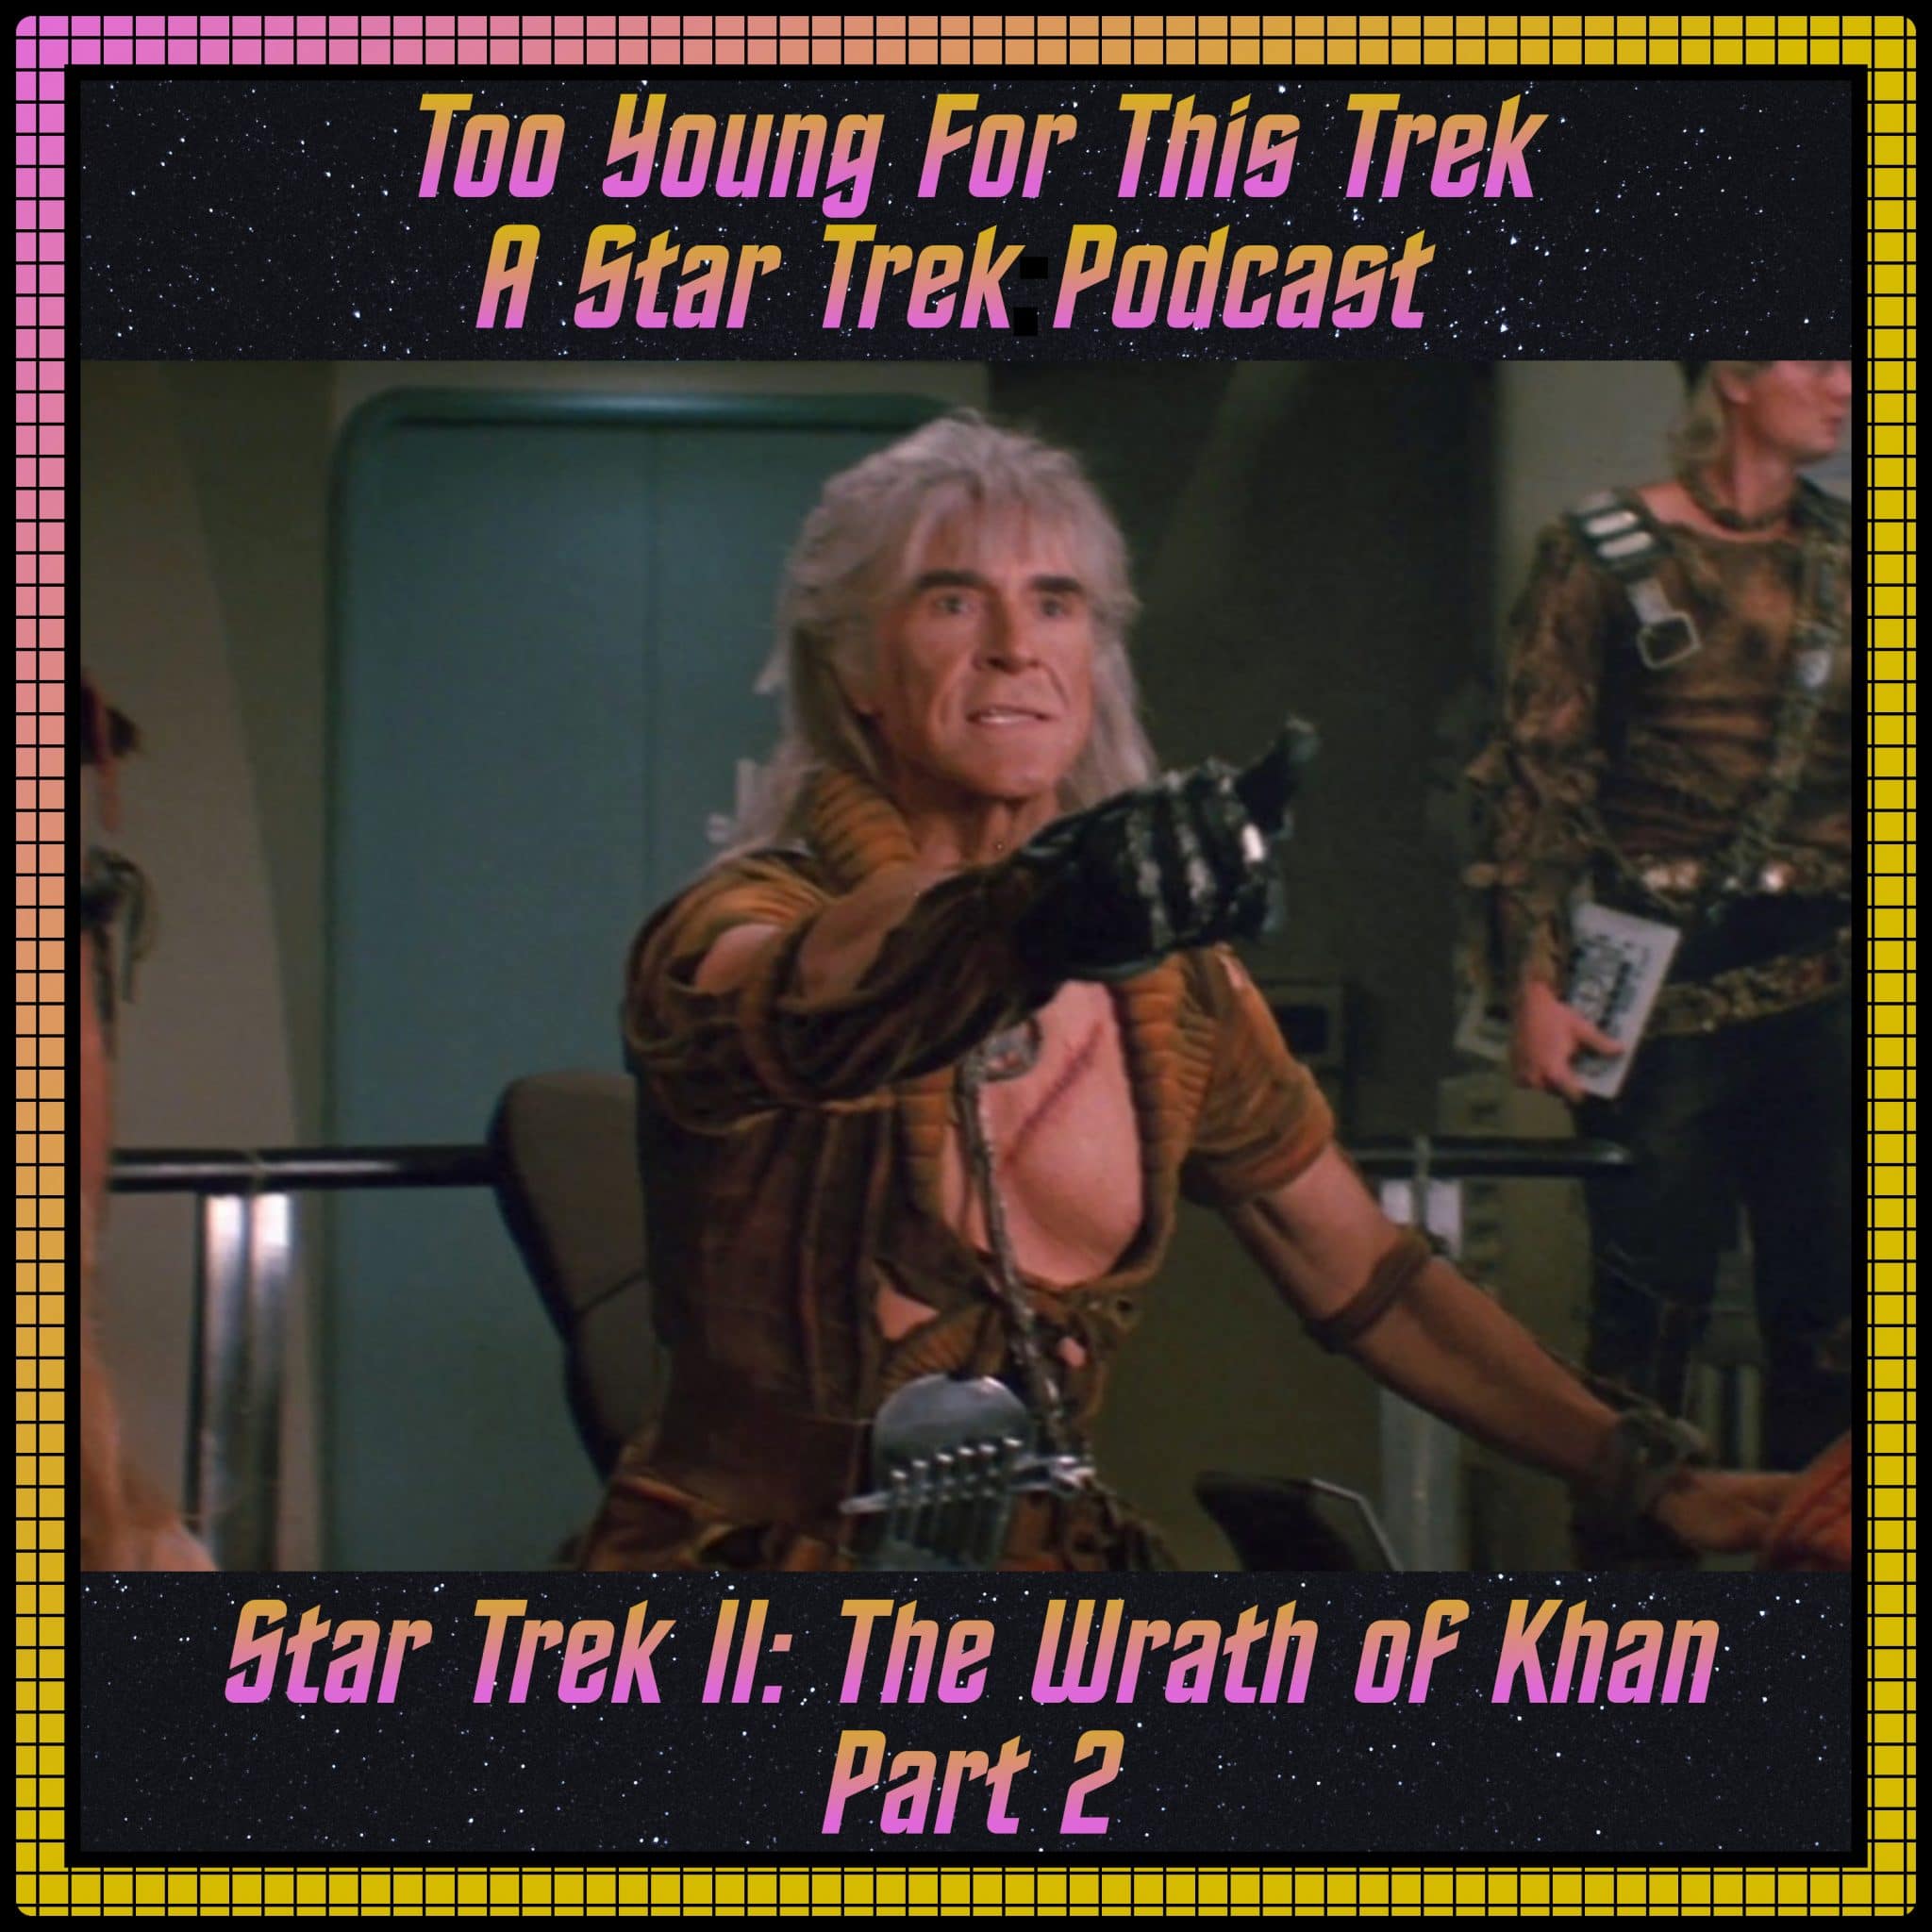 Star Trek II: The Wrath of Khan - Part 2